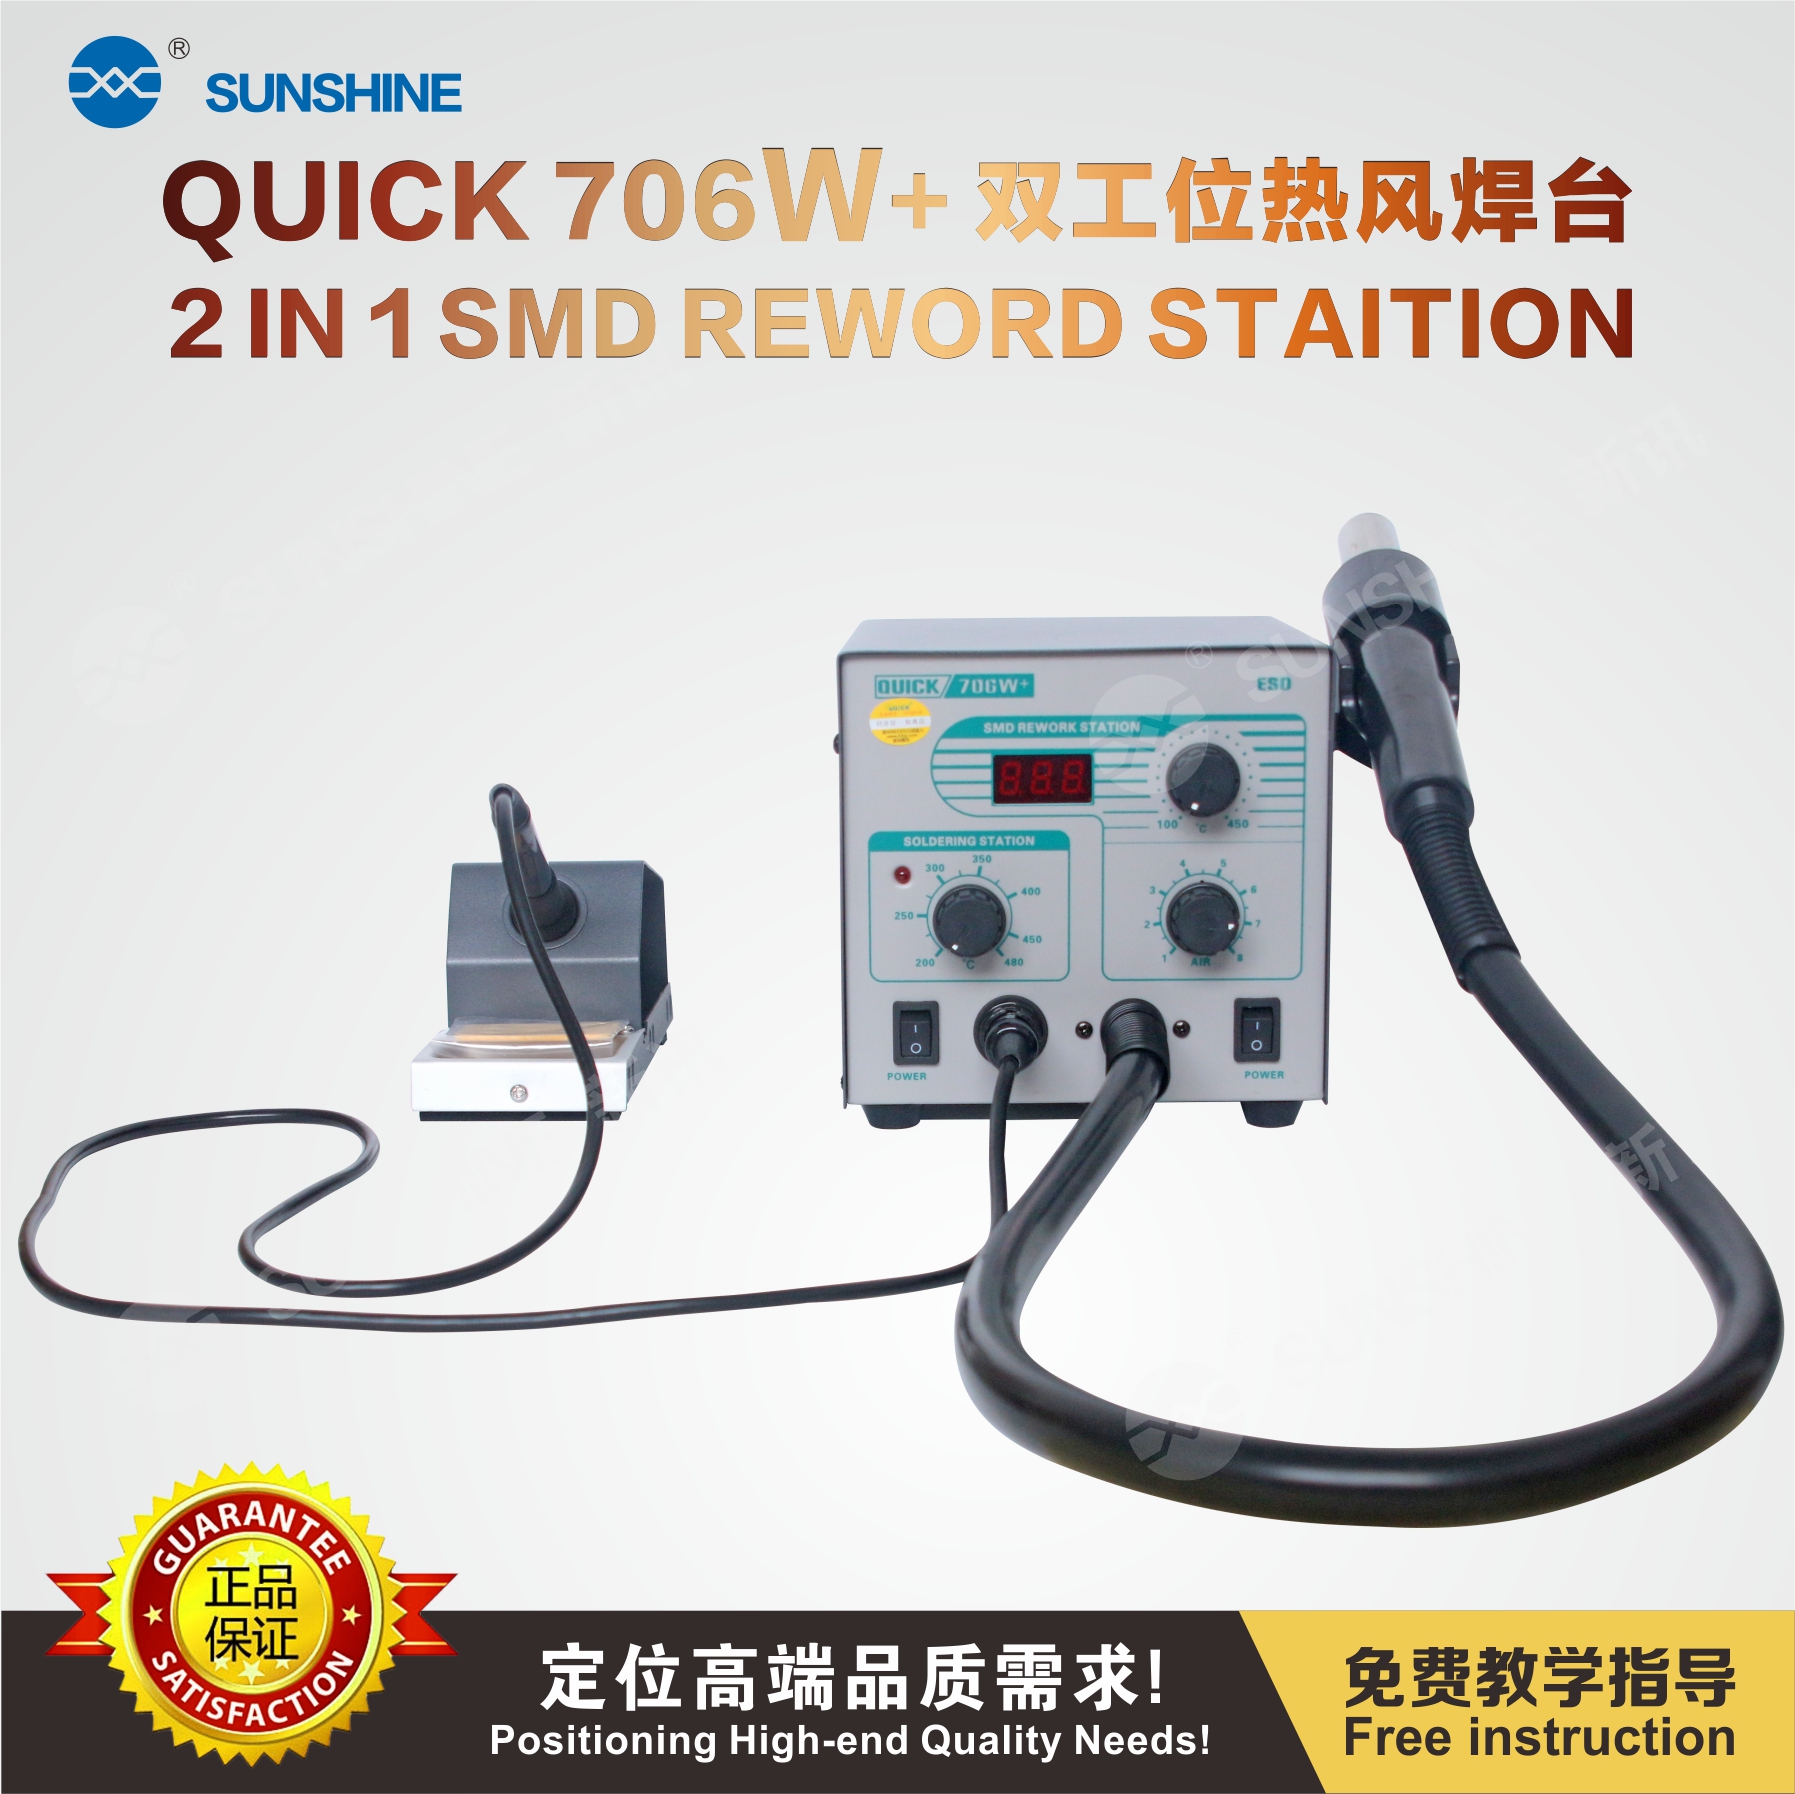 QUICK 706W+ 2 in 1 Rework and soldering station  110V/220V QUICK 706W+ 2 in 1 Rework and soldering station    